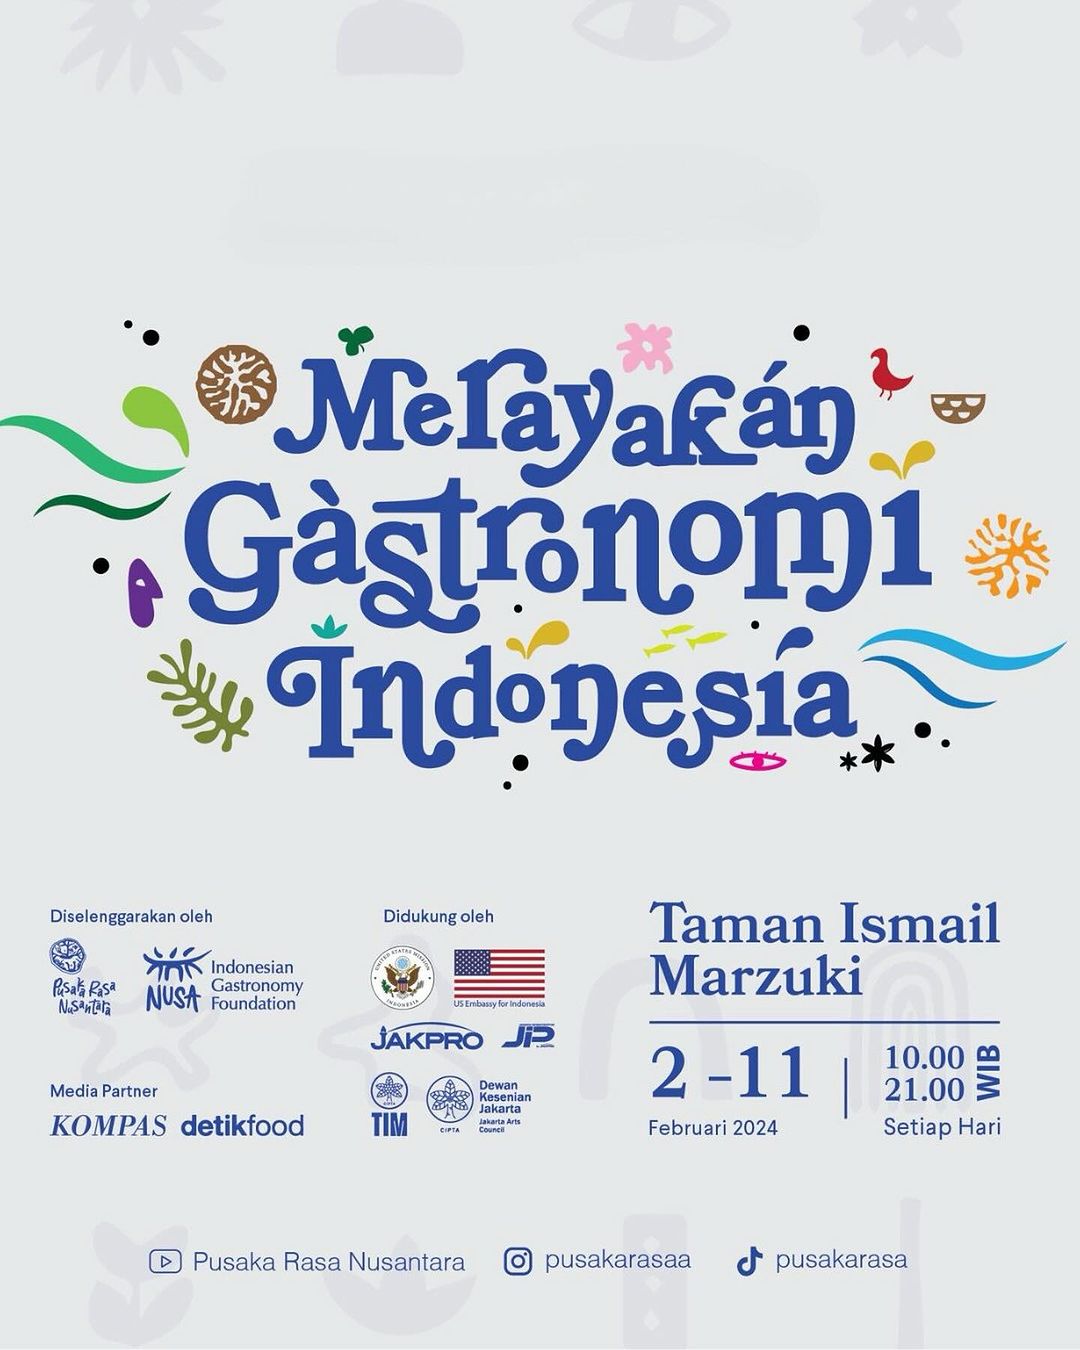 Merayakan Gastronomi Indonesia, Taman Ismail Marzuki, Jakarta Pusat